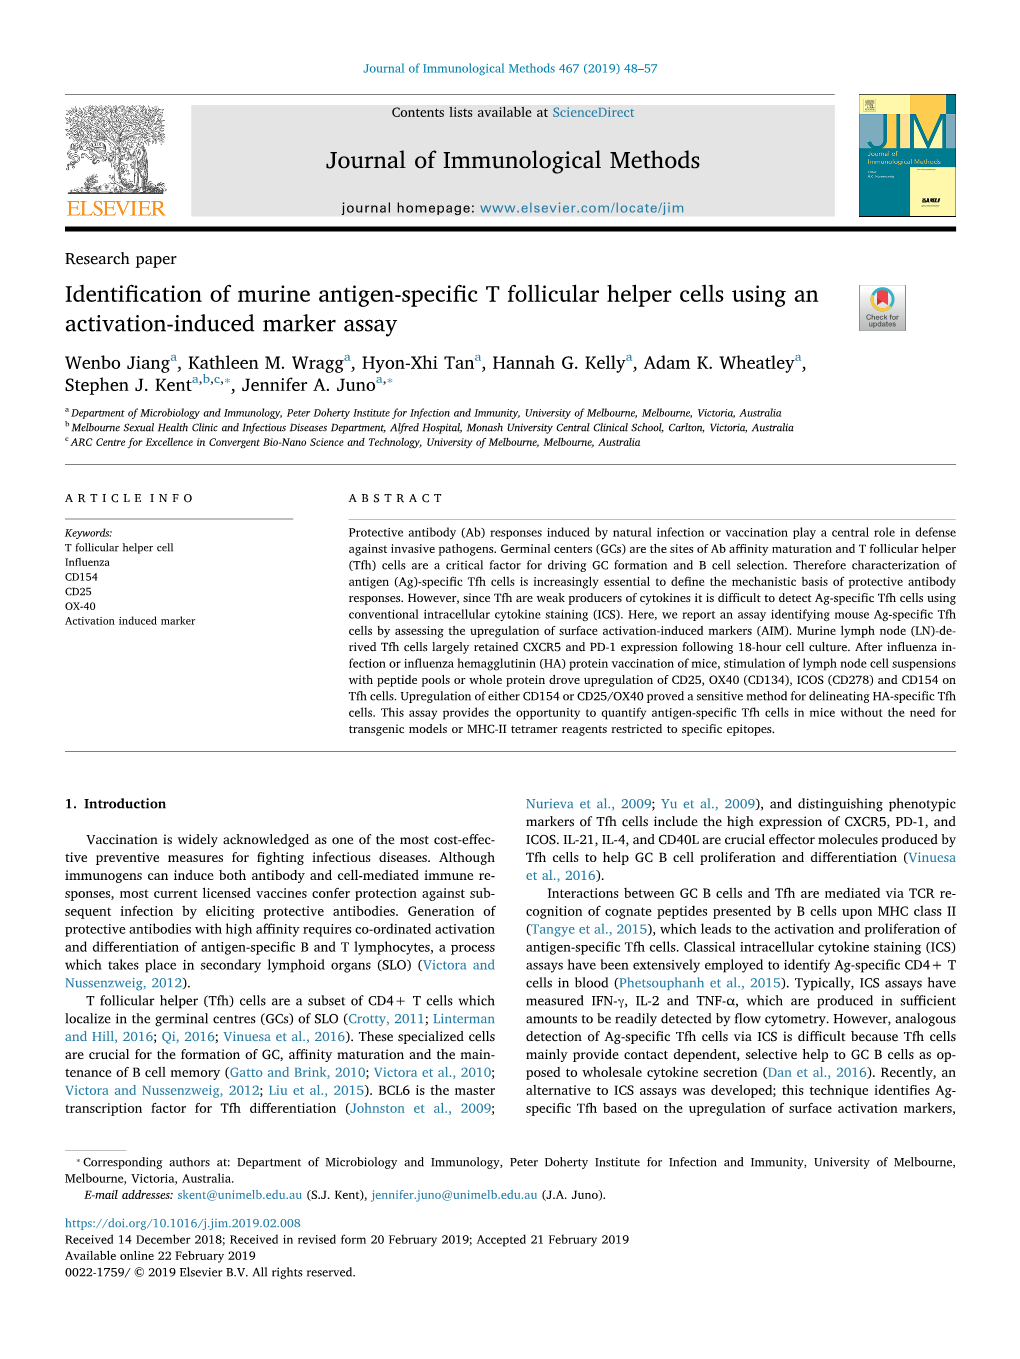 Journal of Immunological Methods Identification of Murine Antigen